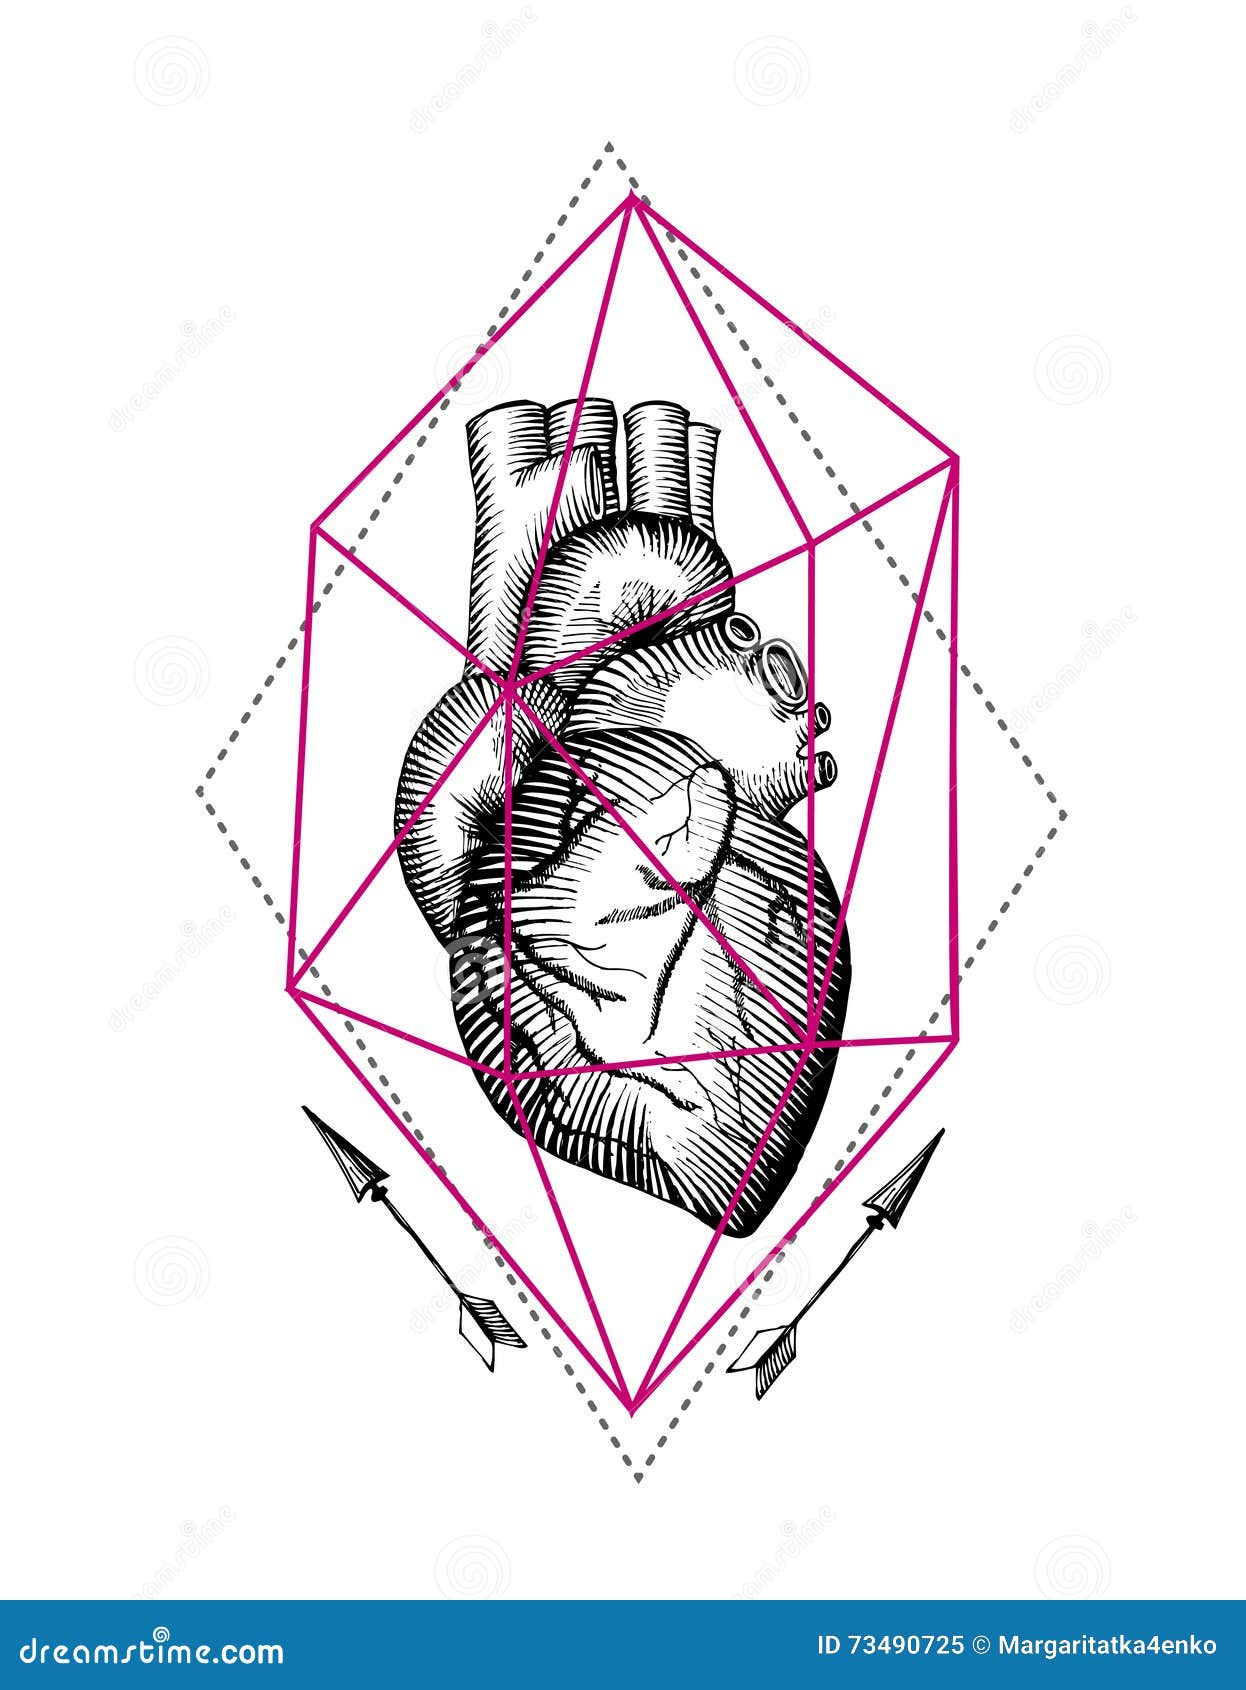  anatomical heart